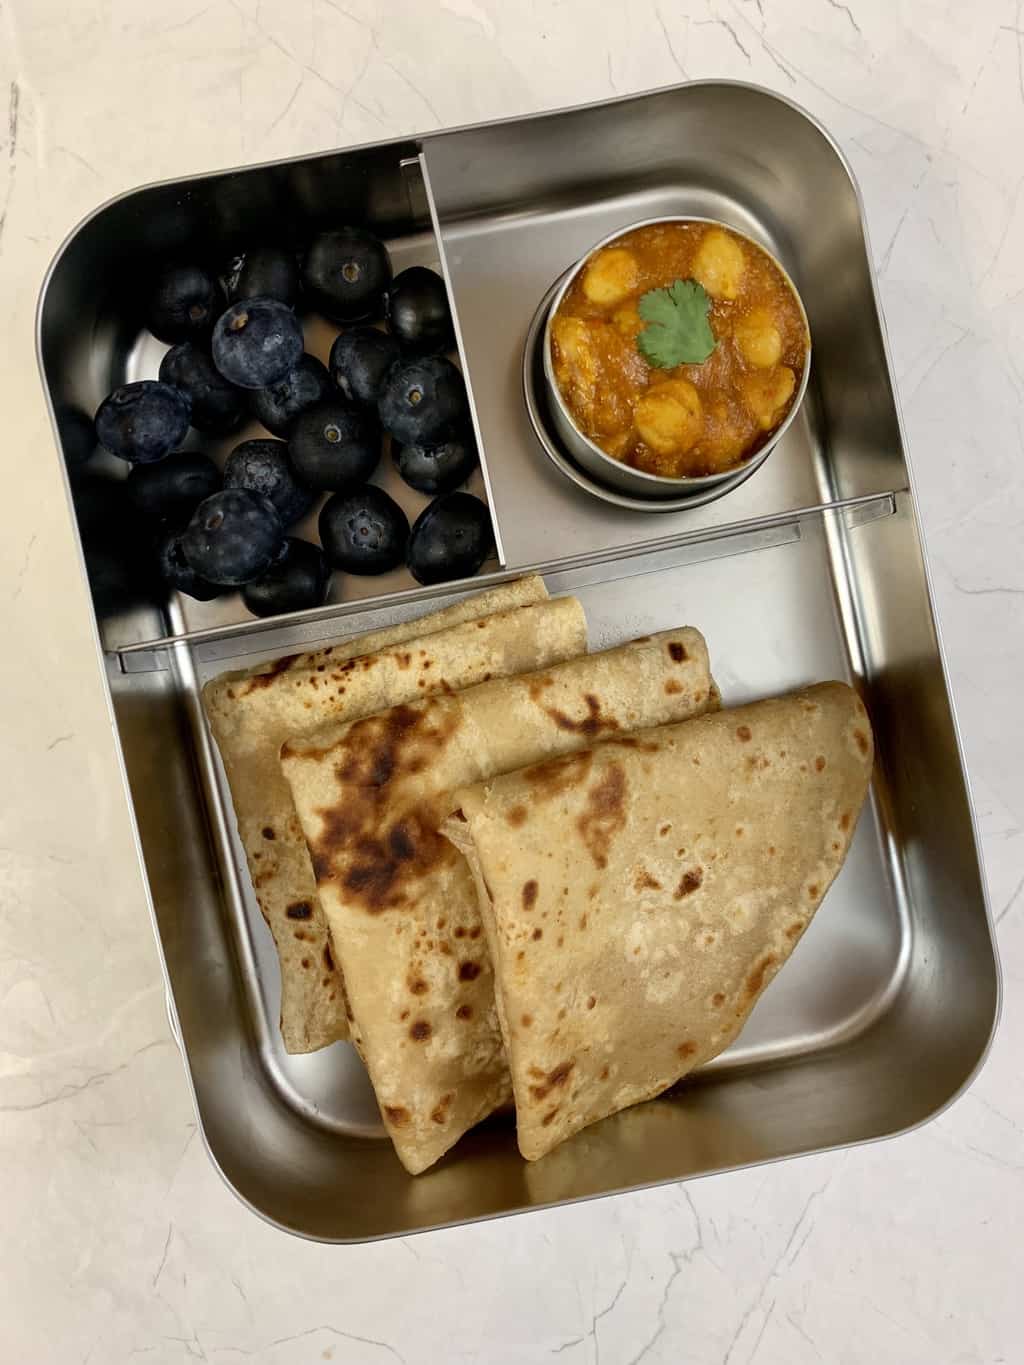 lunchboxidea25 chana masala chapati and blueberries